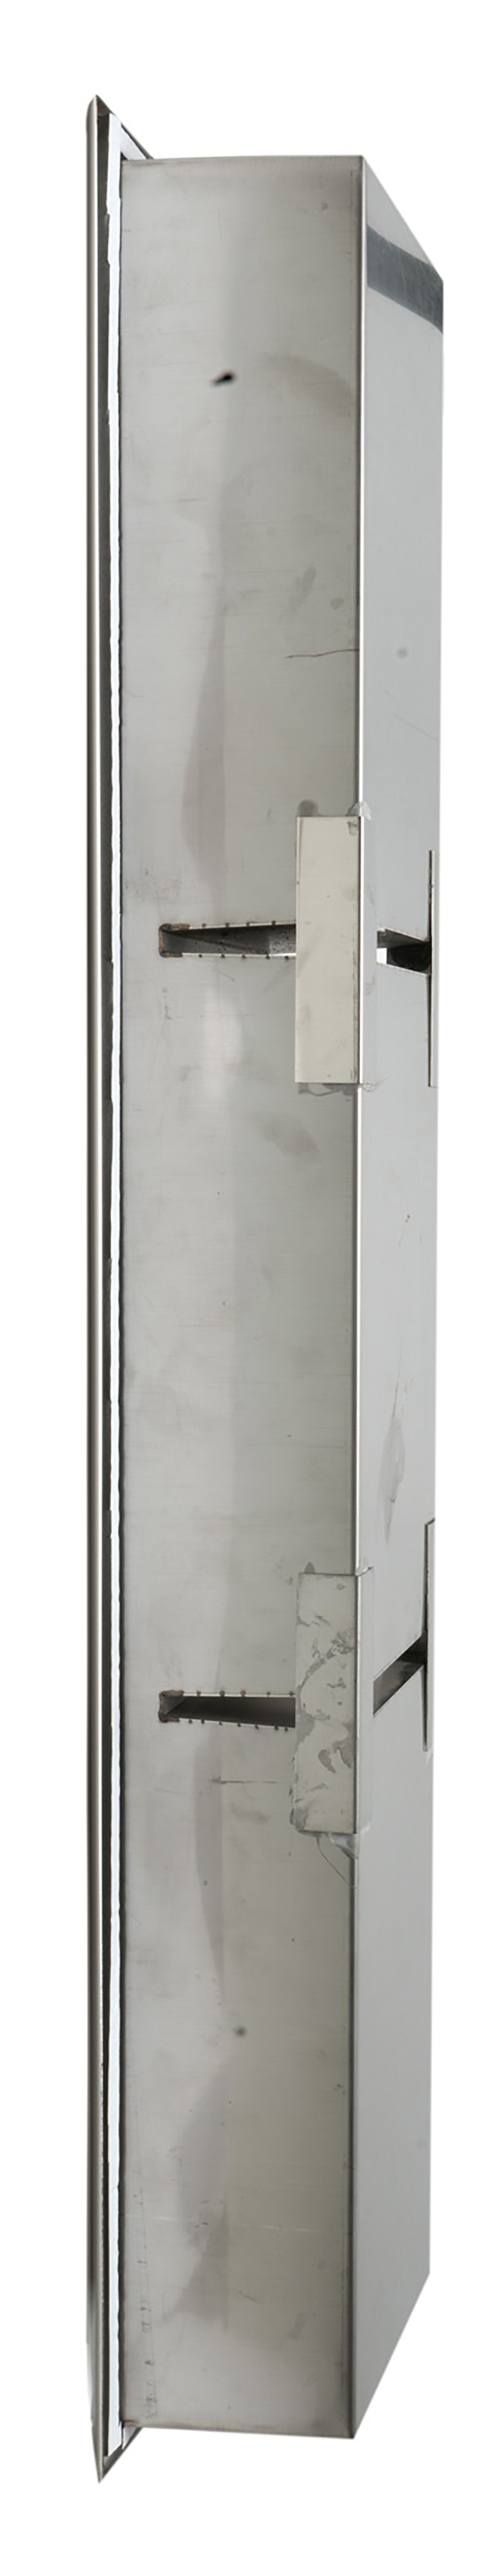 ALFI brand 8 x 36 Polished Stainless Steel Vertical Triple Shelf Bath Shower Niche